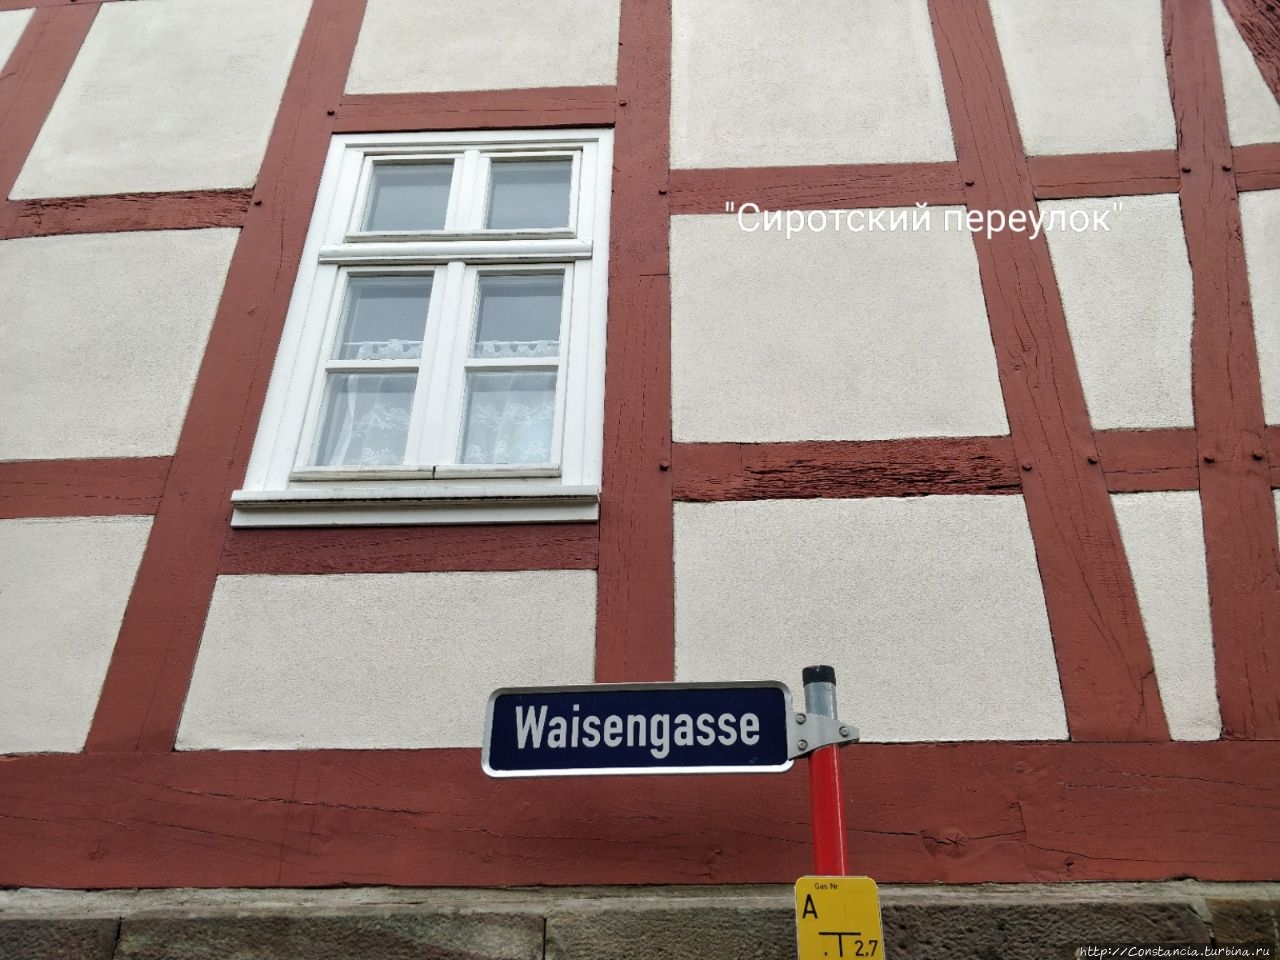 Сиротский переулок Бад-Вильдунген, Германия